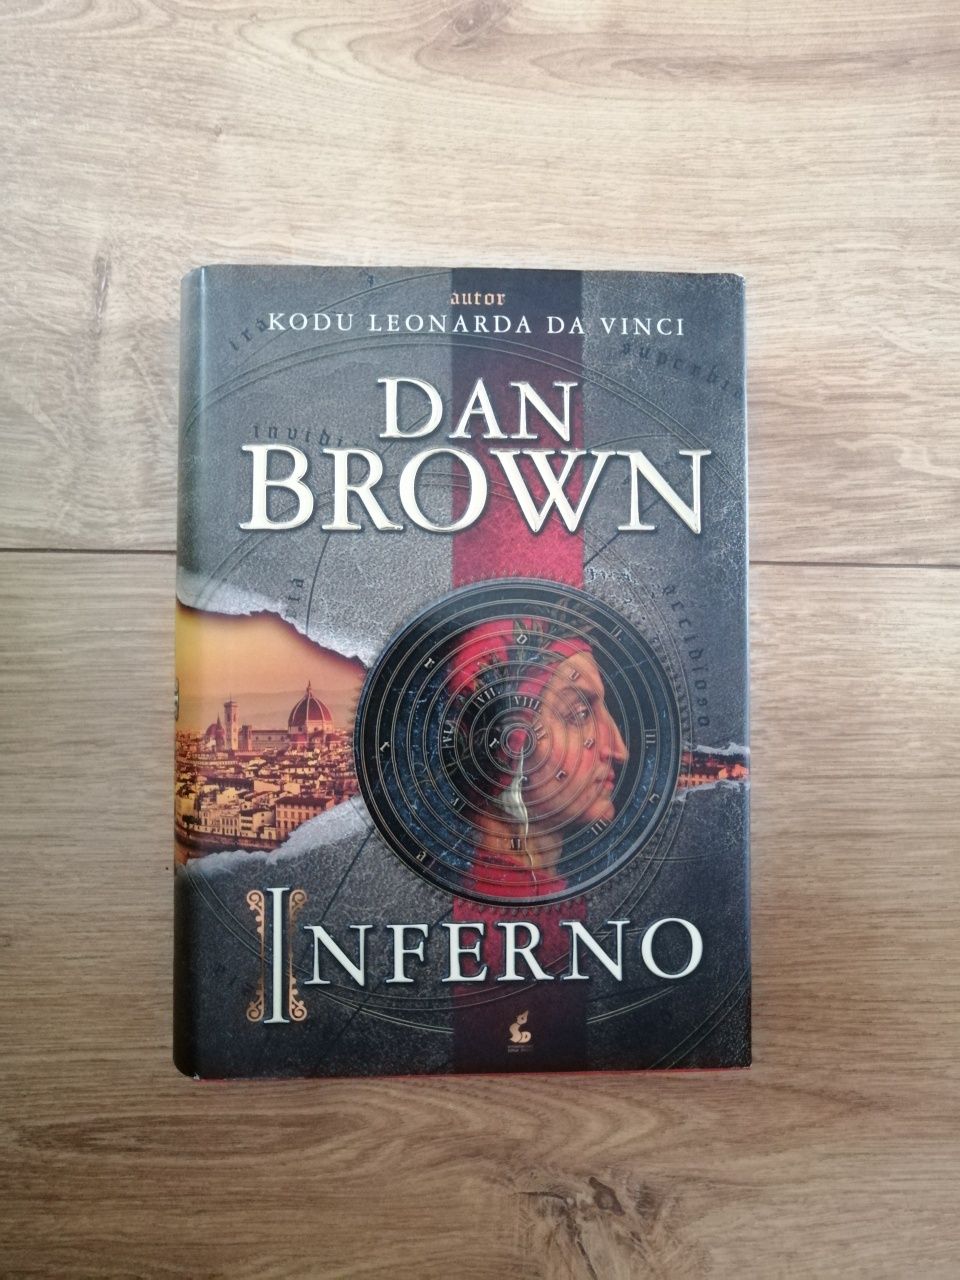 Książka pt. Inferno, autor Dan Brown